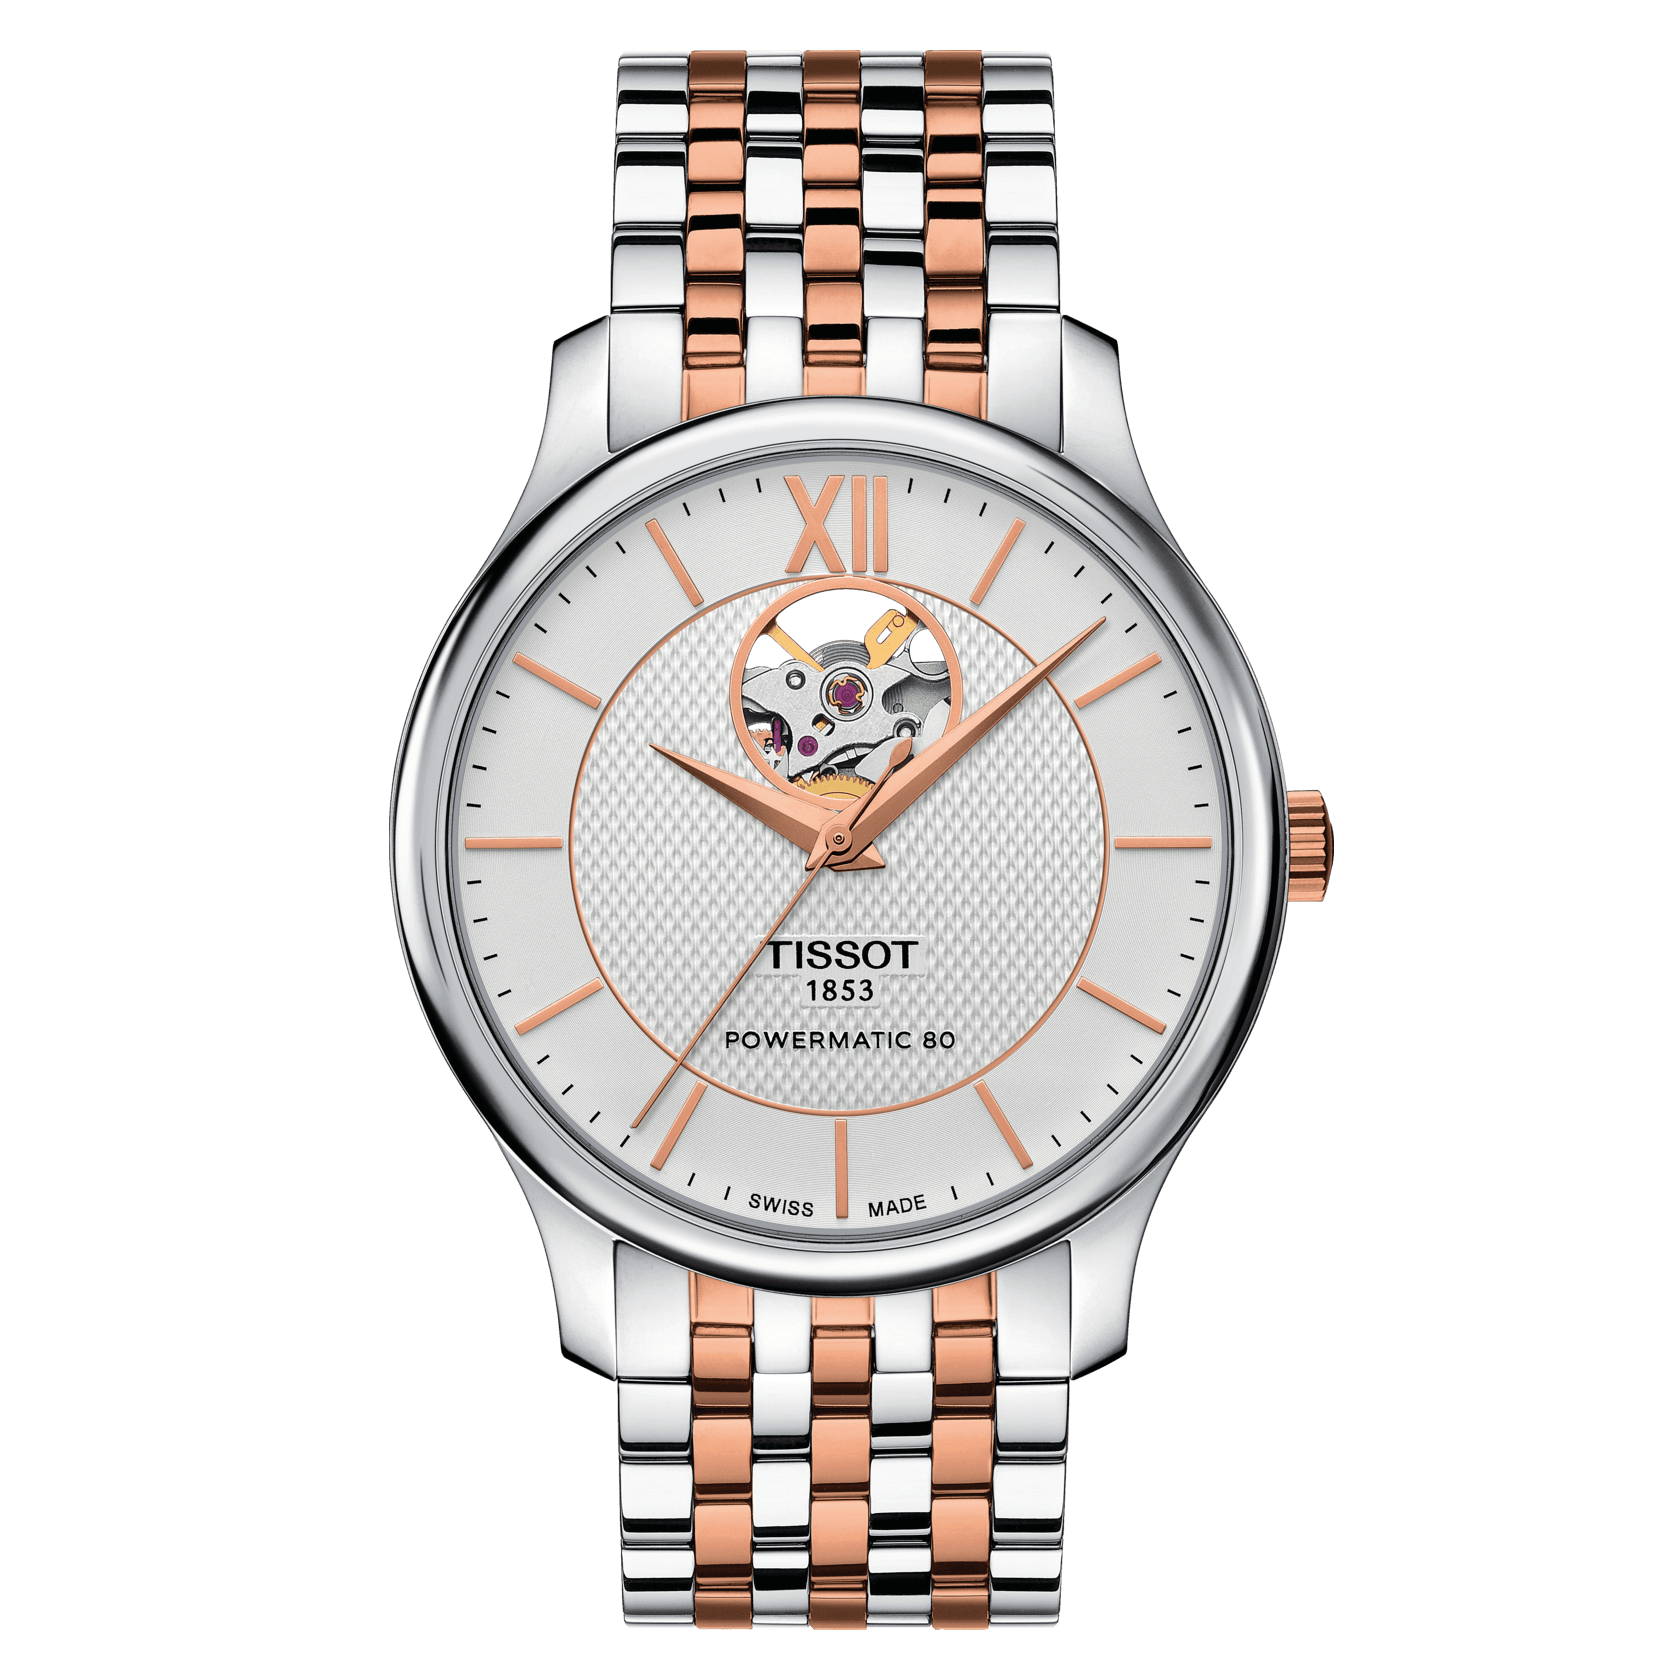 Tissot Tradition Powermatic 80 Open Heart Silver Dial Watch for Men - Kamal Watch Company